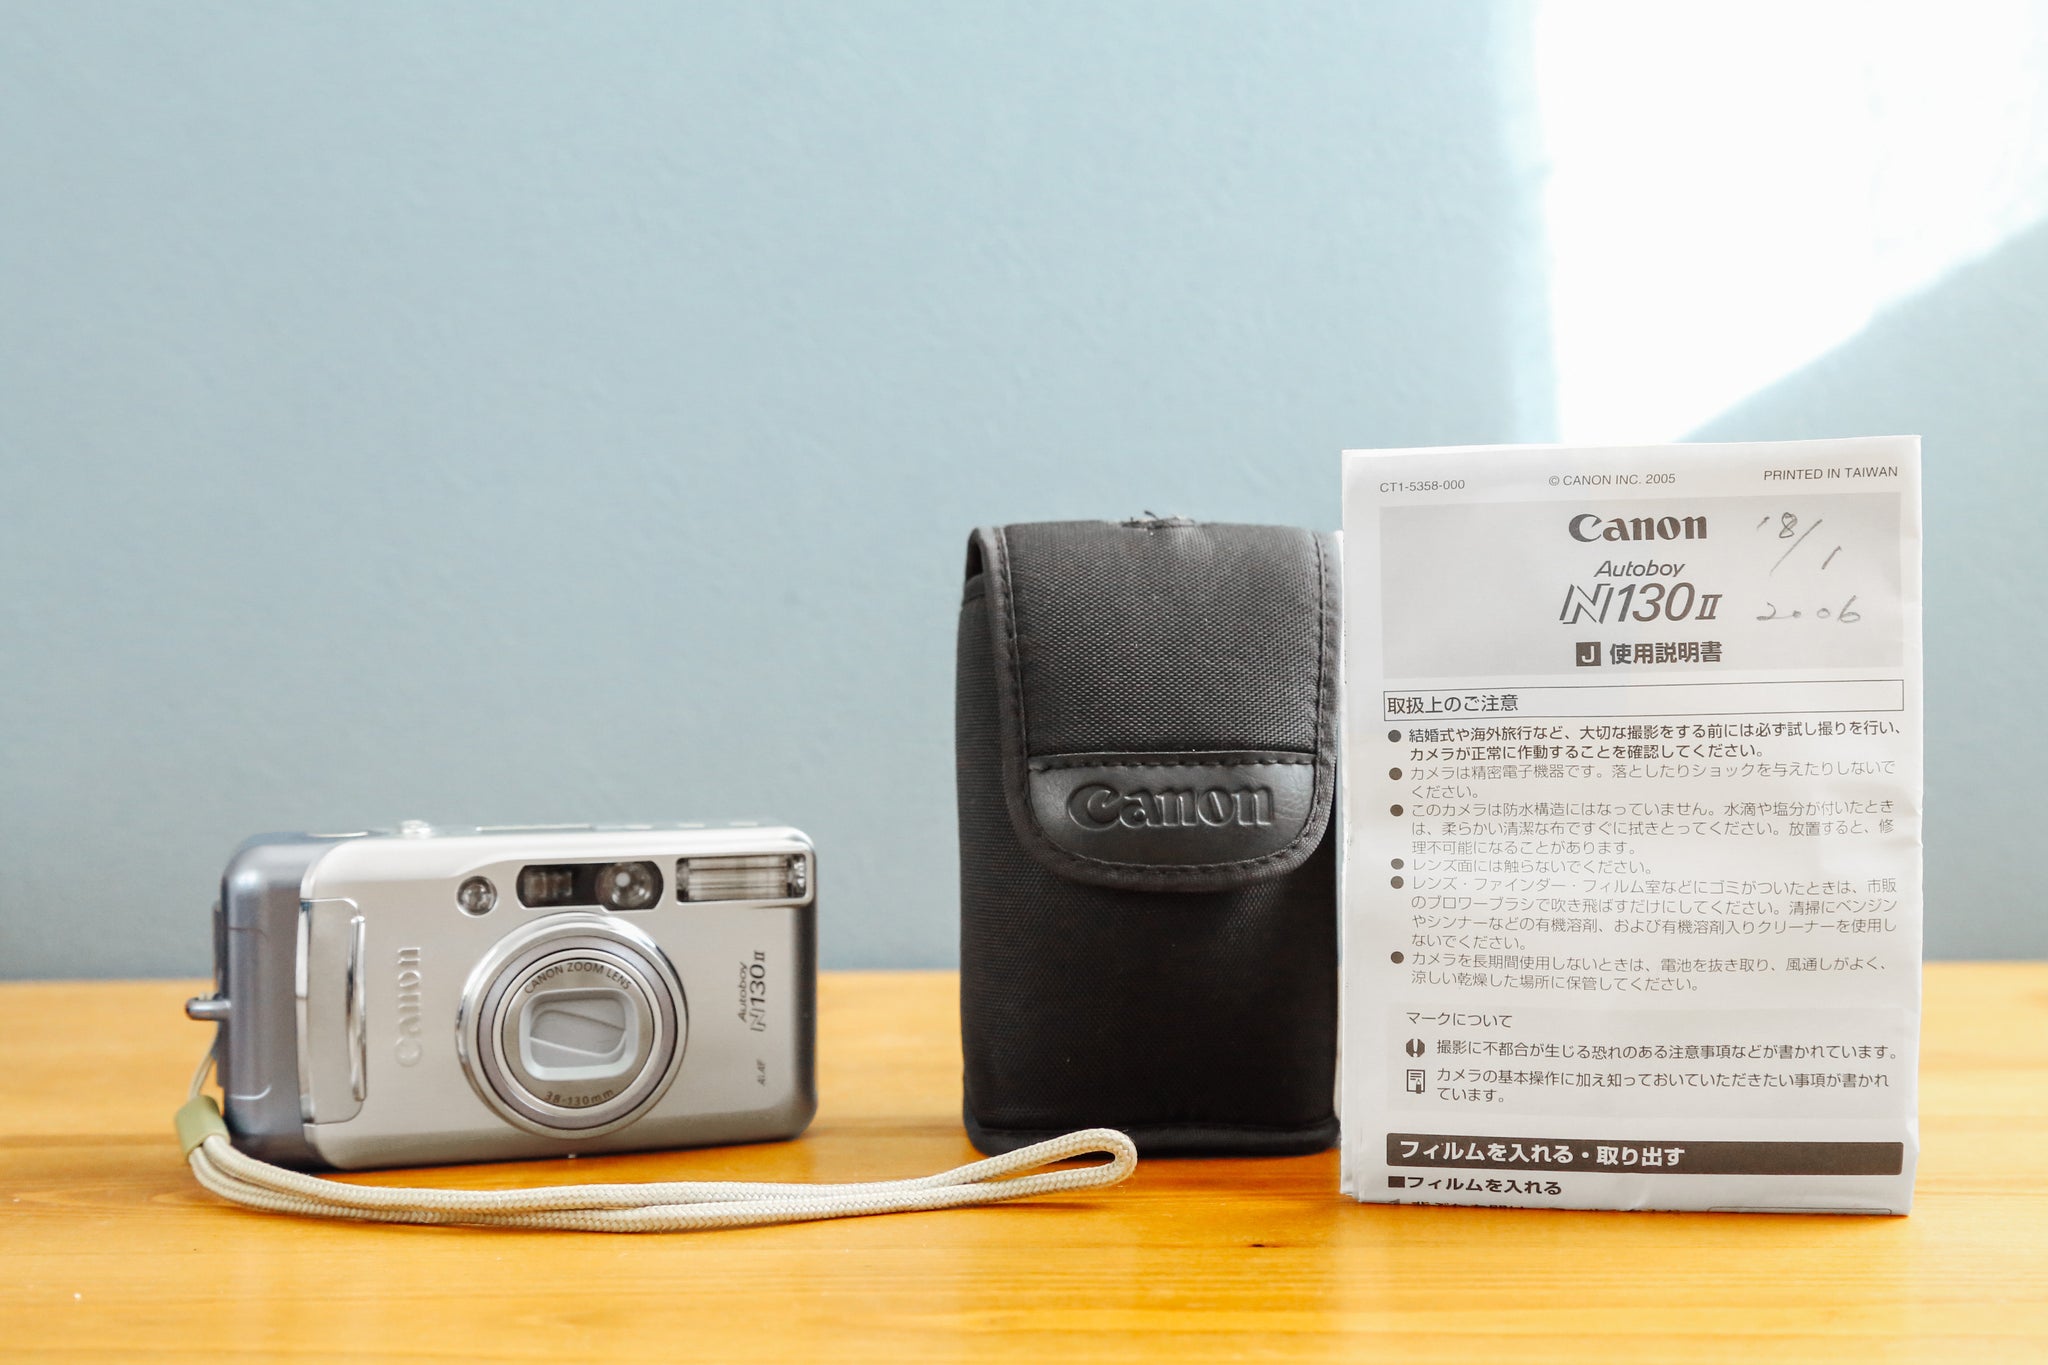 Canon Autoboy N130II【完動品】 – Ein Camera